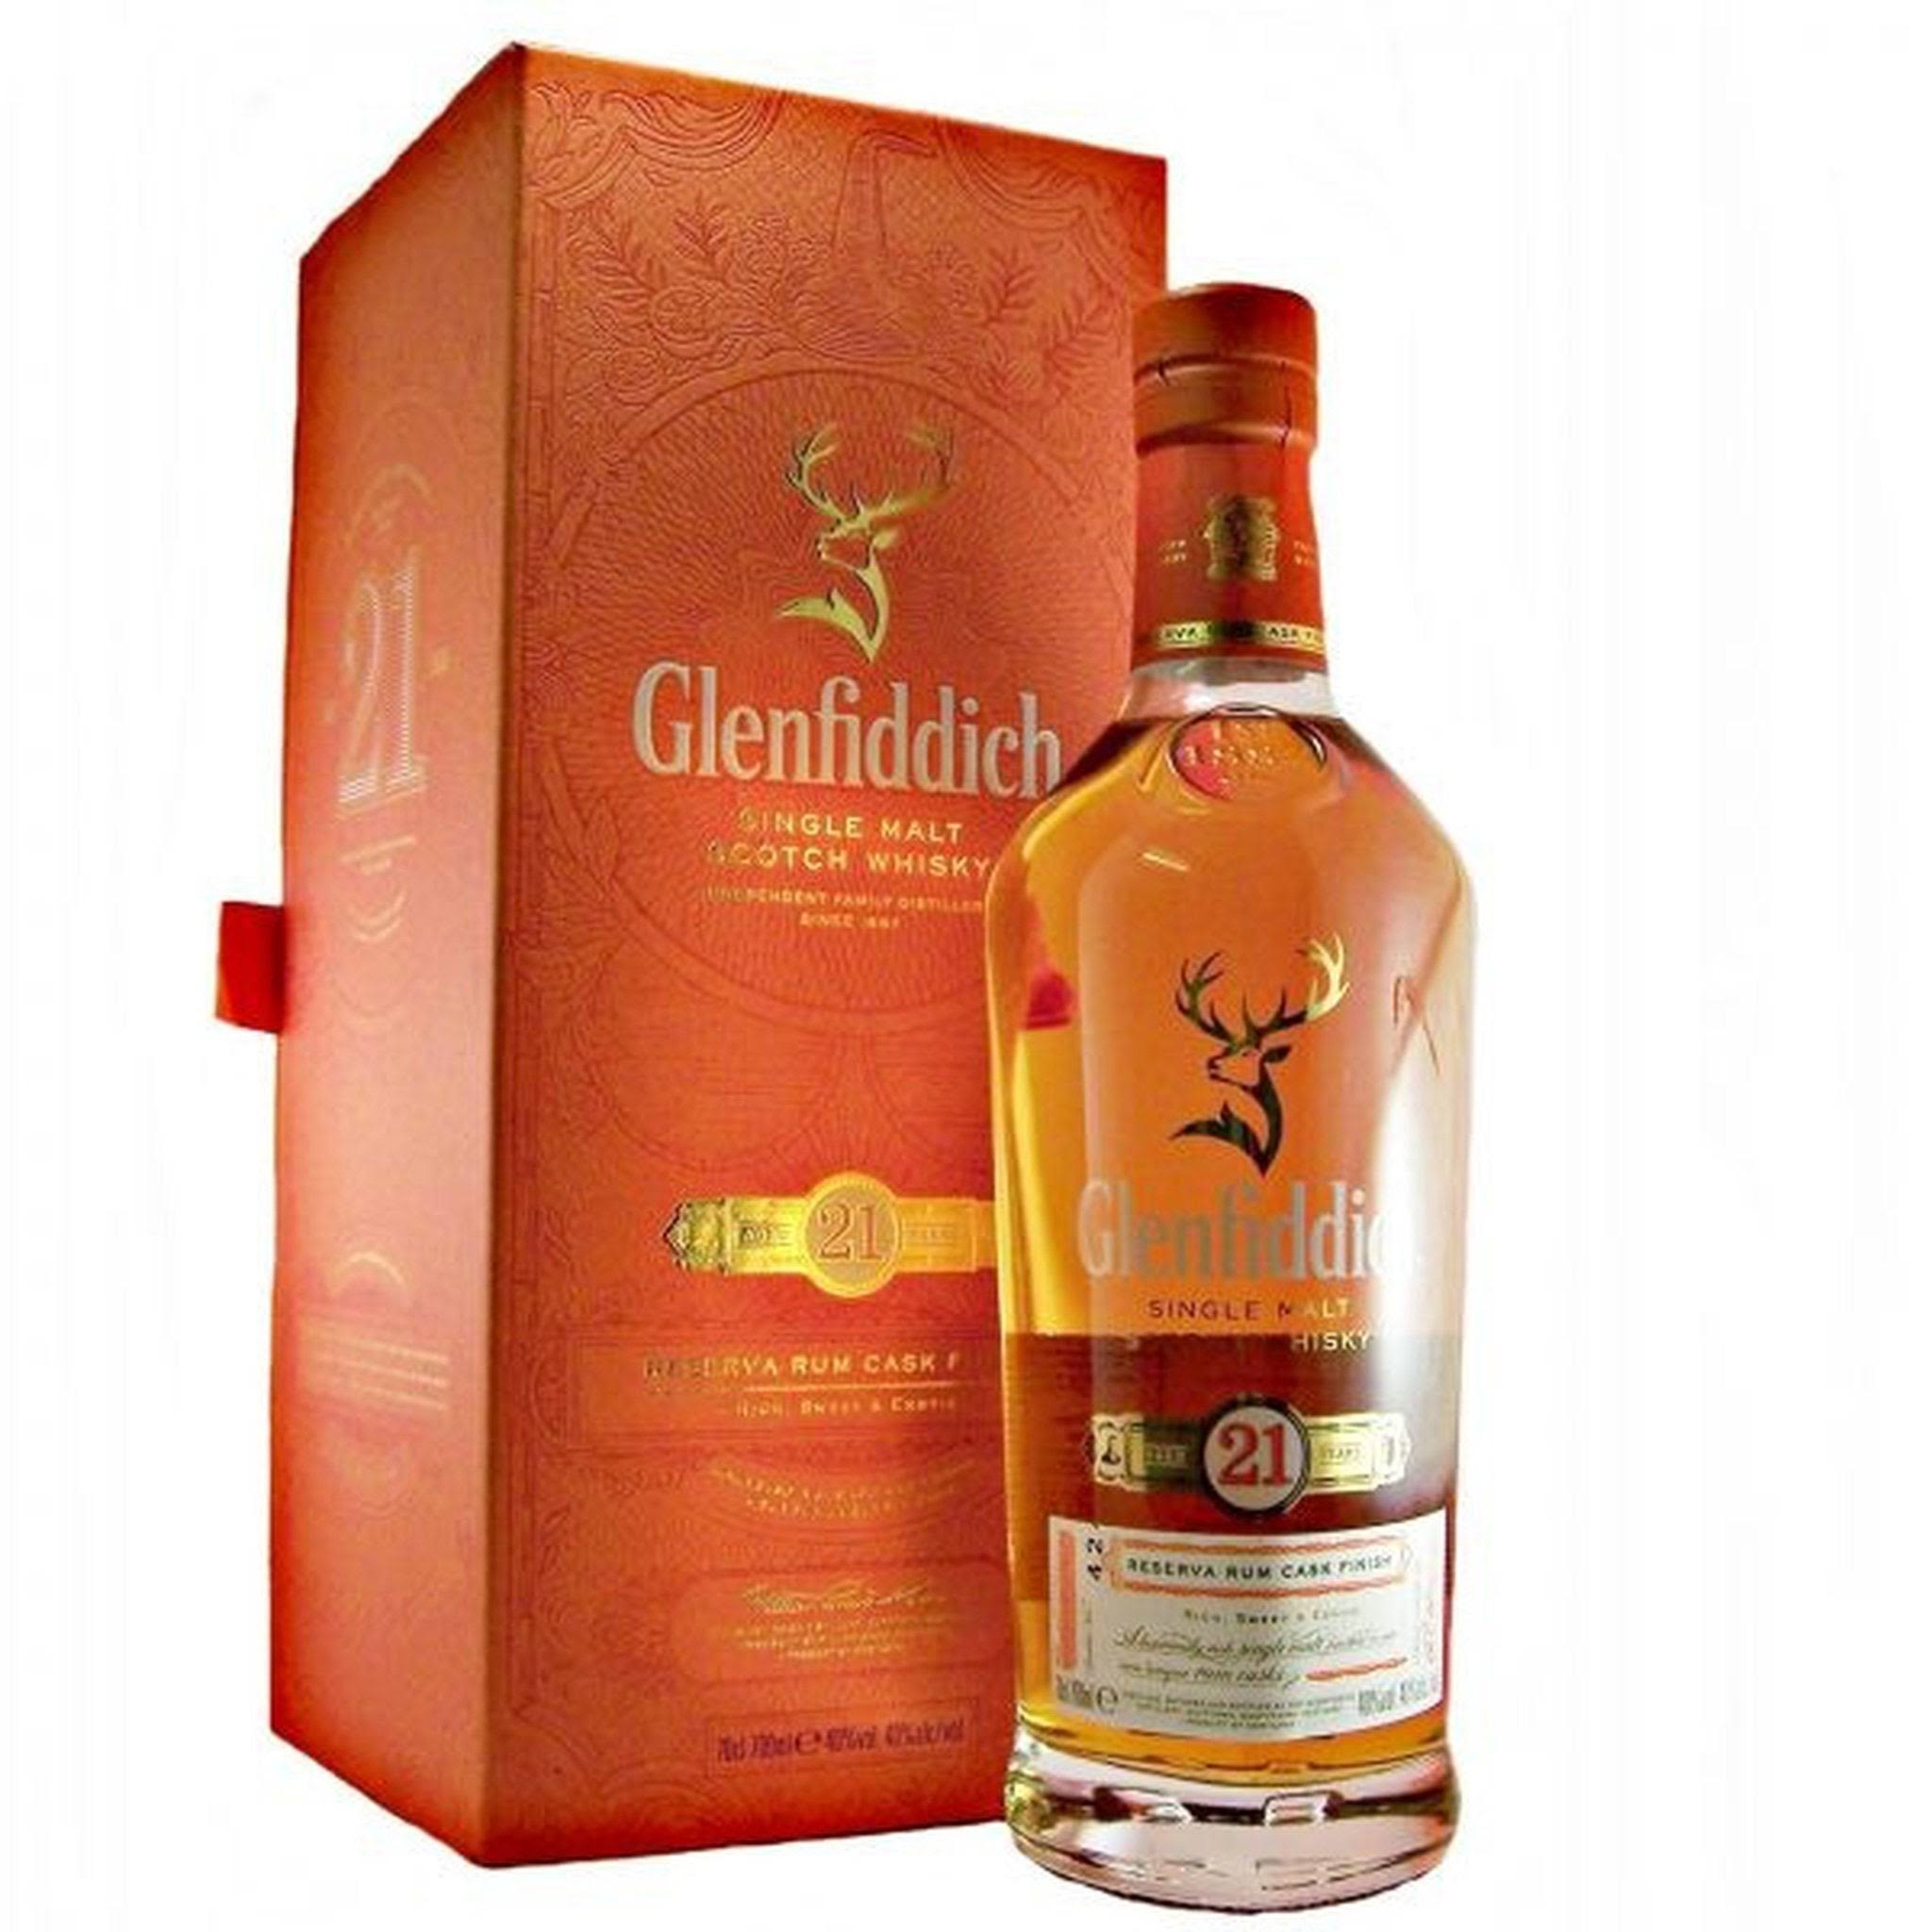 Glenfiddich Scotch Single Malt 21 Year Old - 750 ml bottle